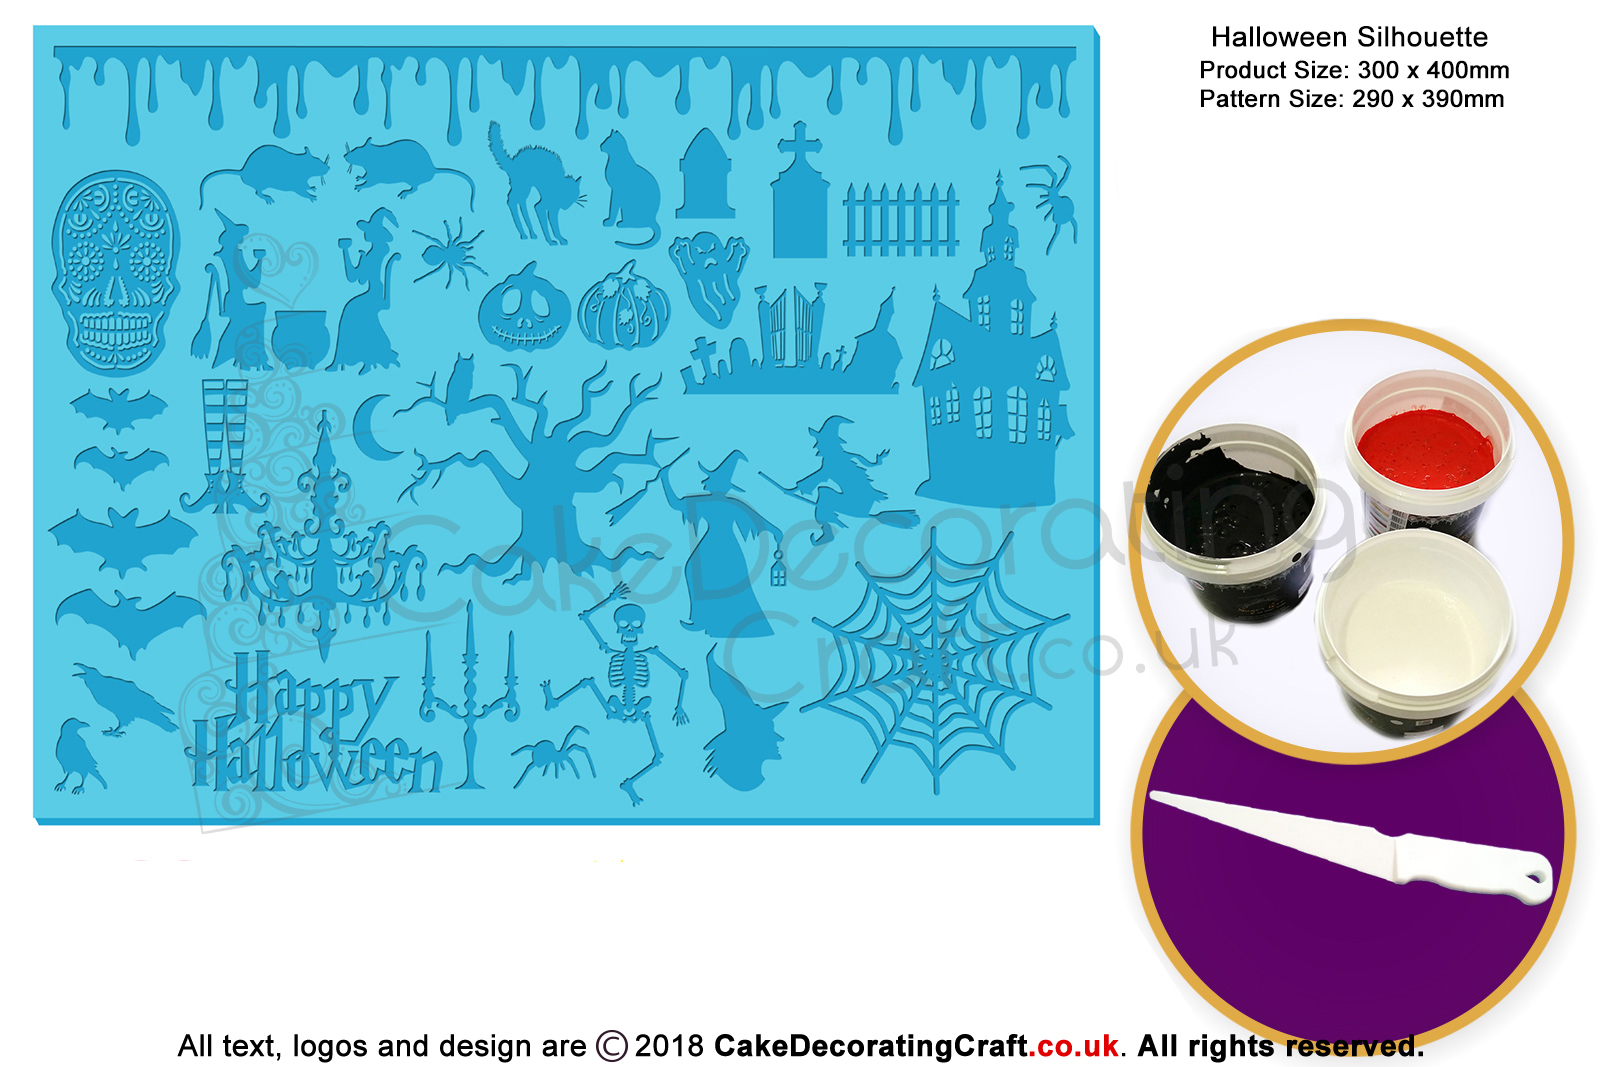 Halloween | Harry Potter | Silhouette Cake Design Starter Kits | Cupcake Cookies Cake Decorating Craft Tool